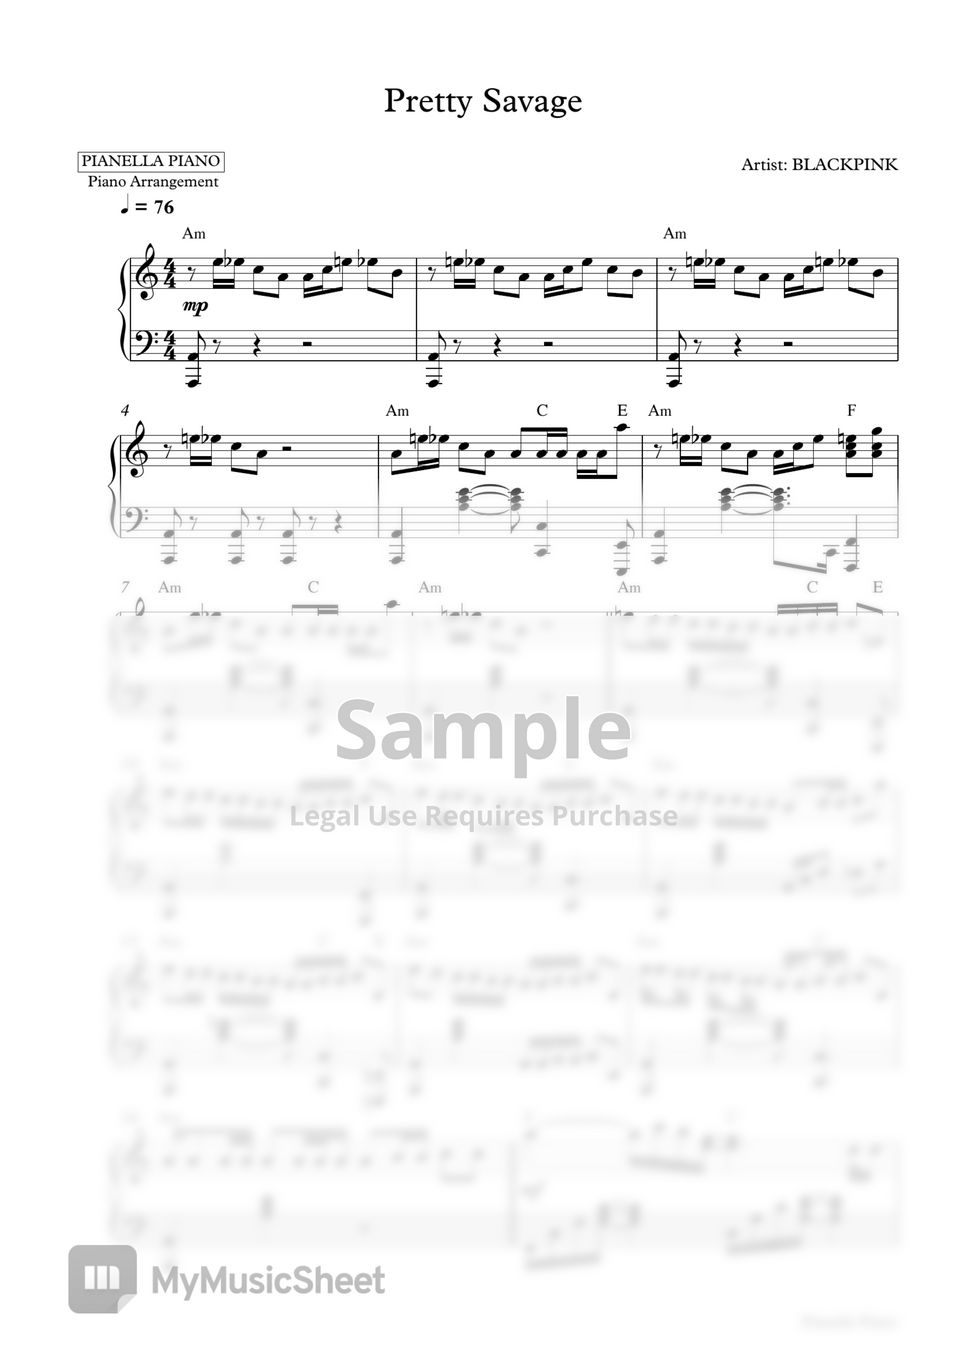 BLACKPINK - Pretty Savage (Piano Sheet) by Pianella Piano